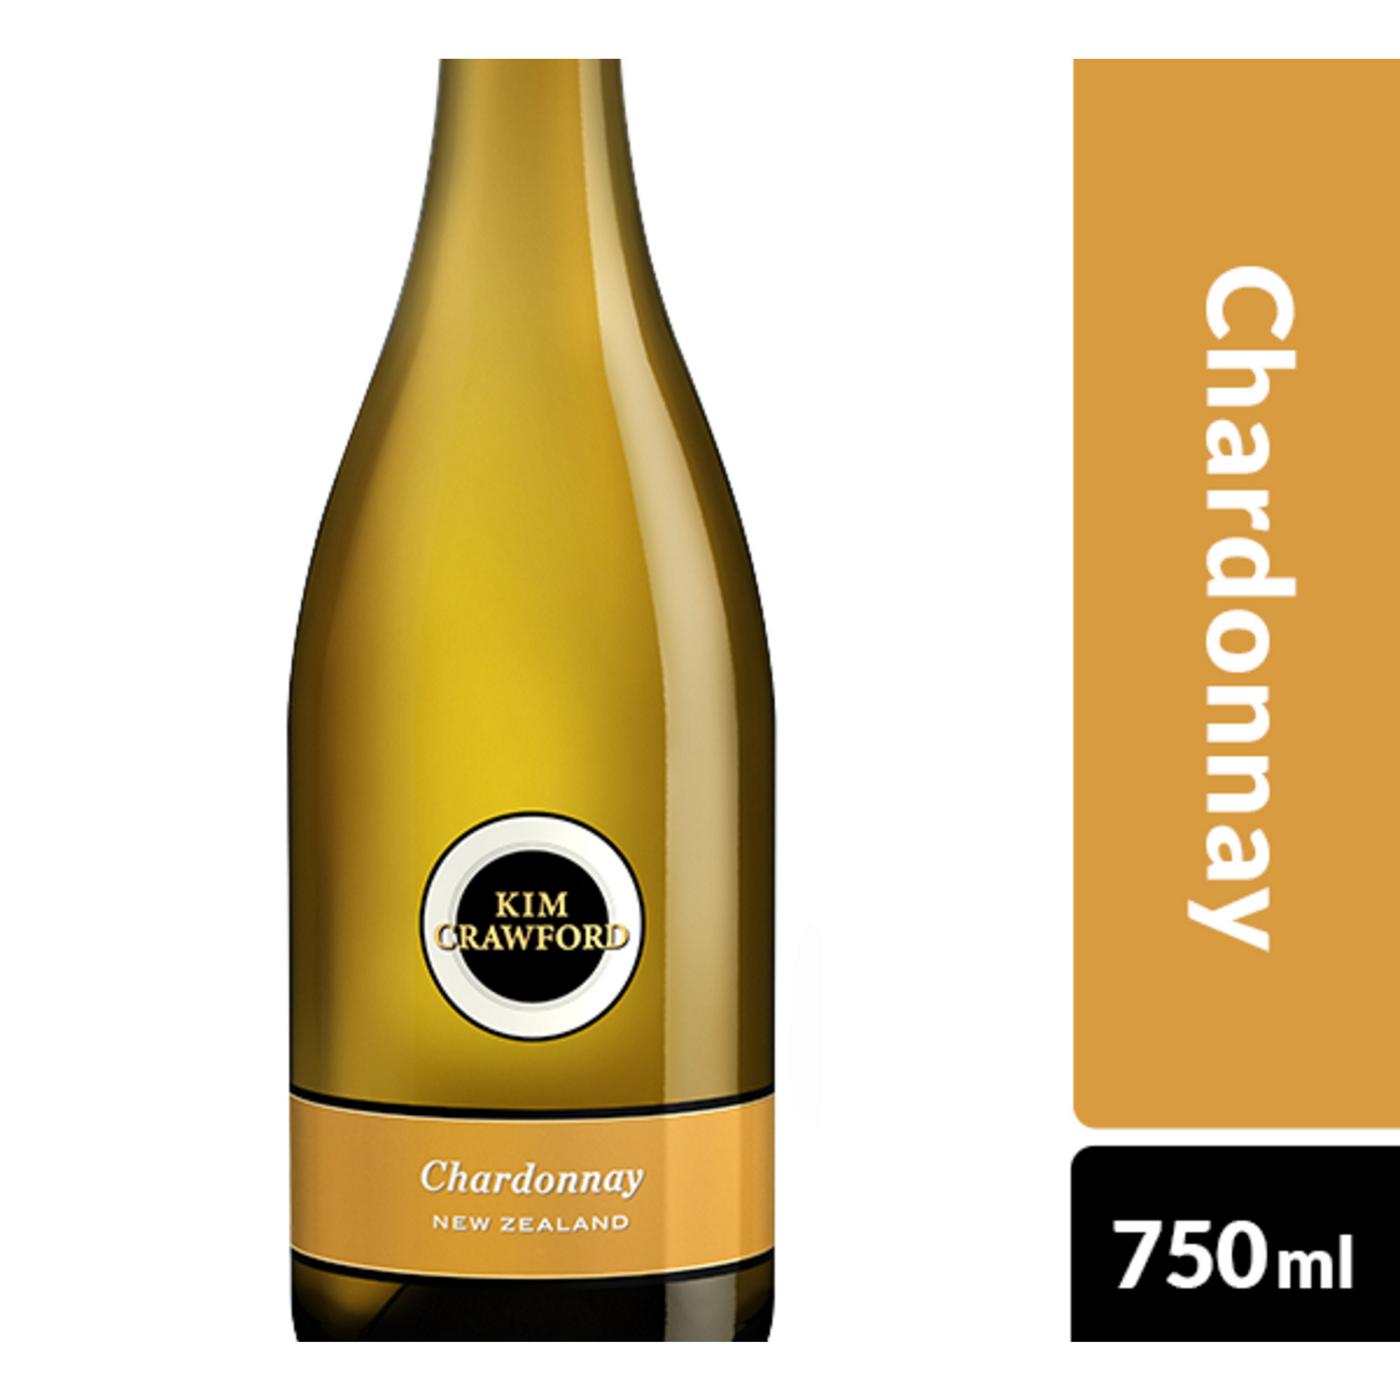 Kim Crawford Chardonnay White Wine; image 6 of 7